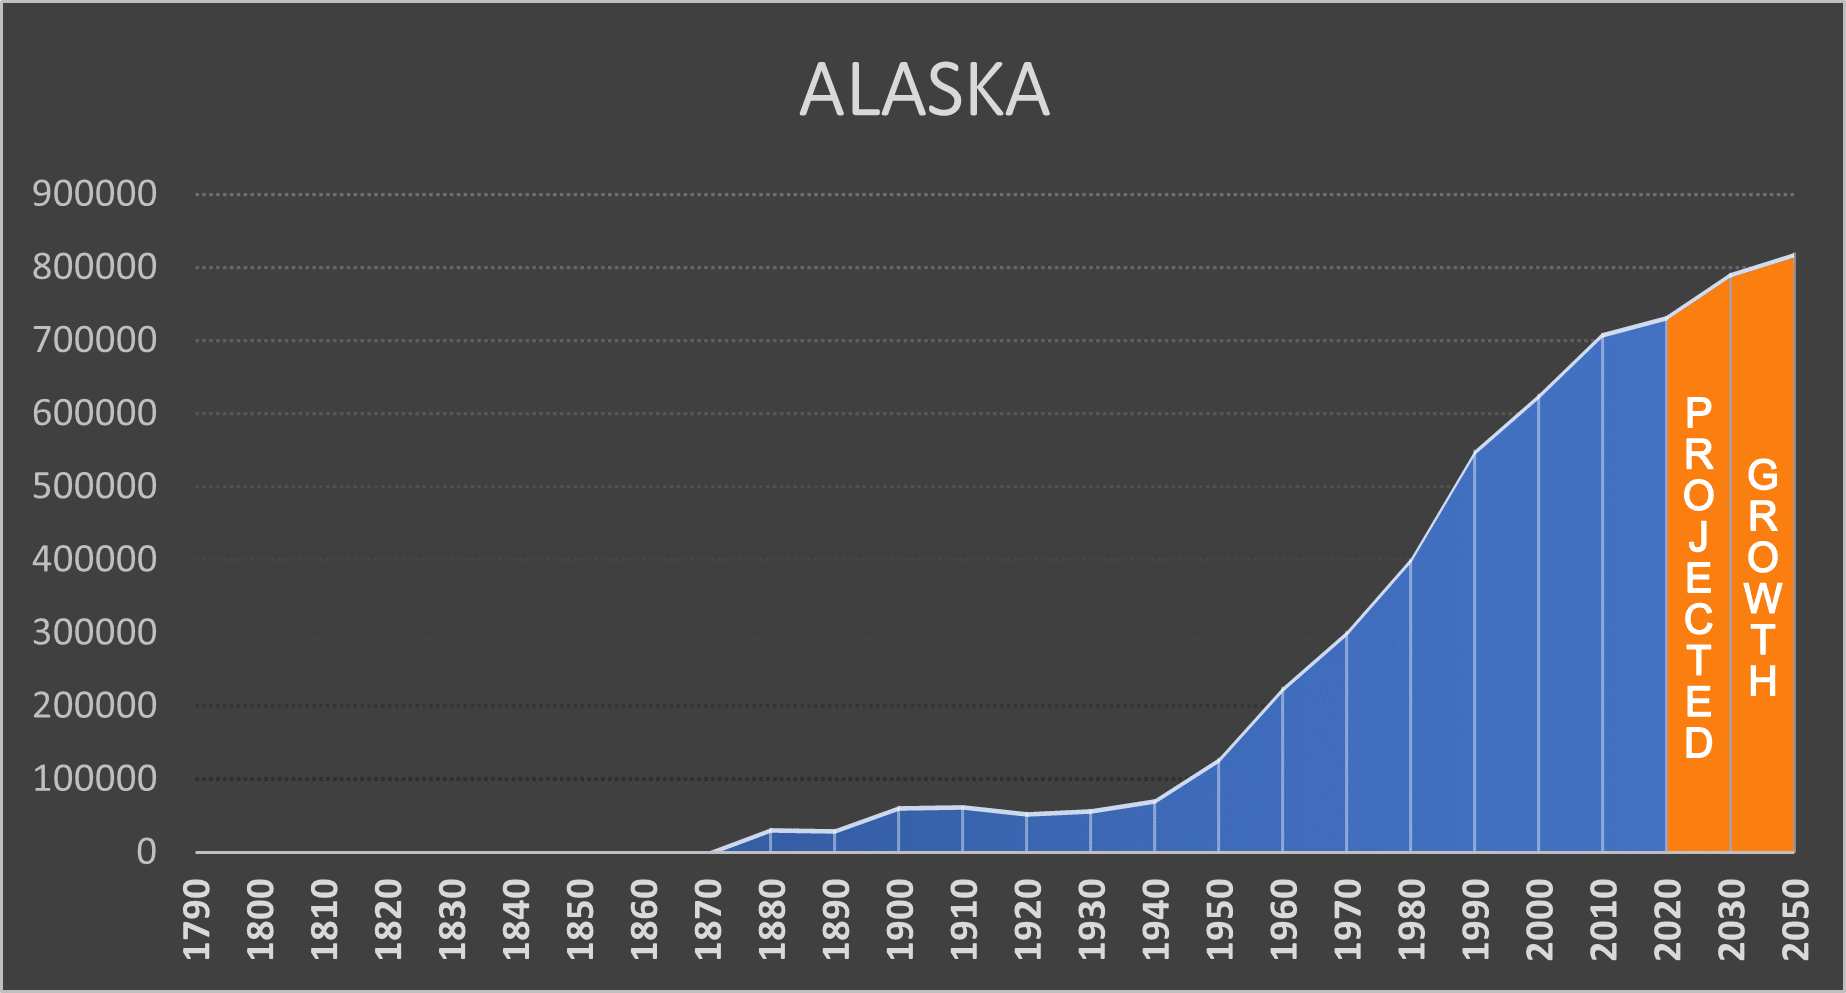 Alaska Negative Population Growth